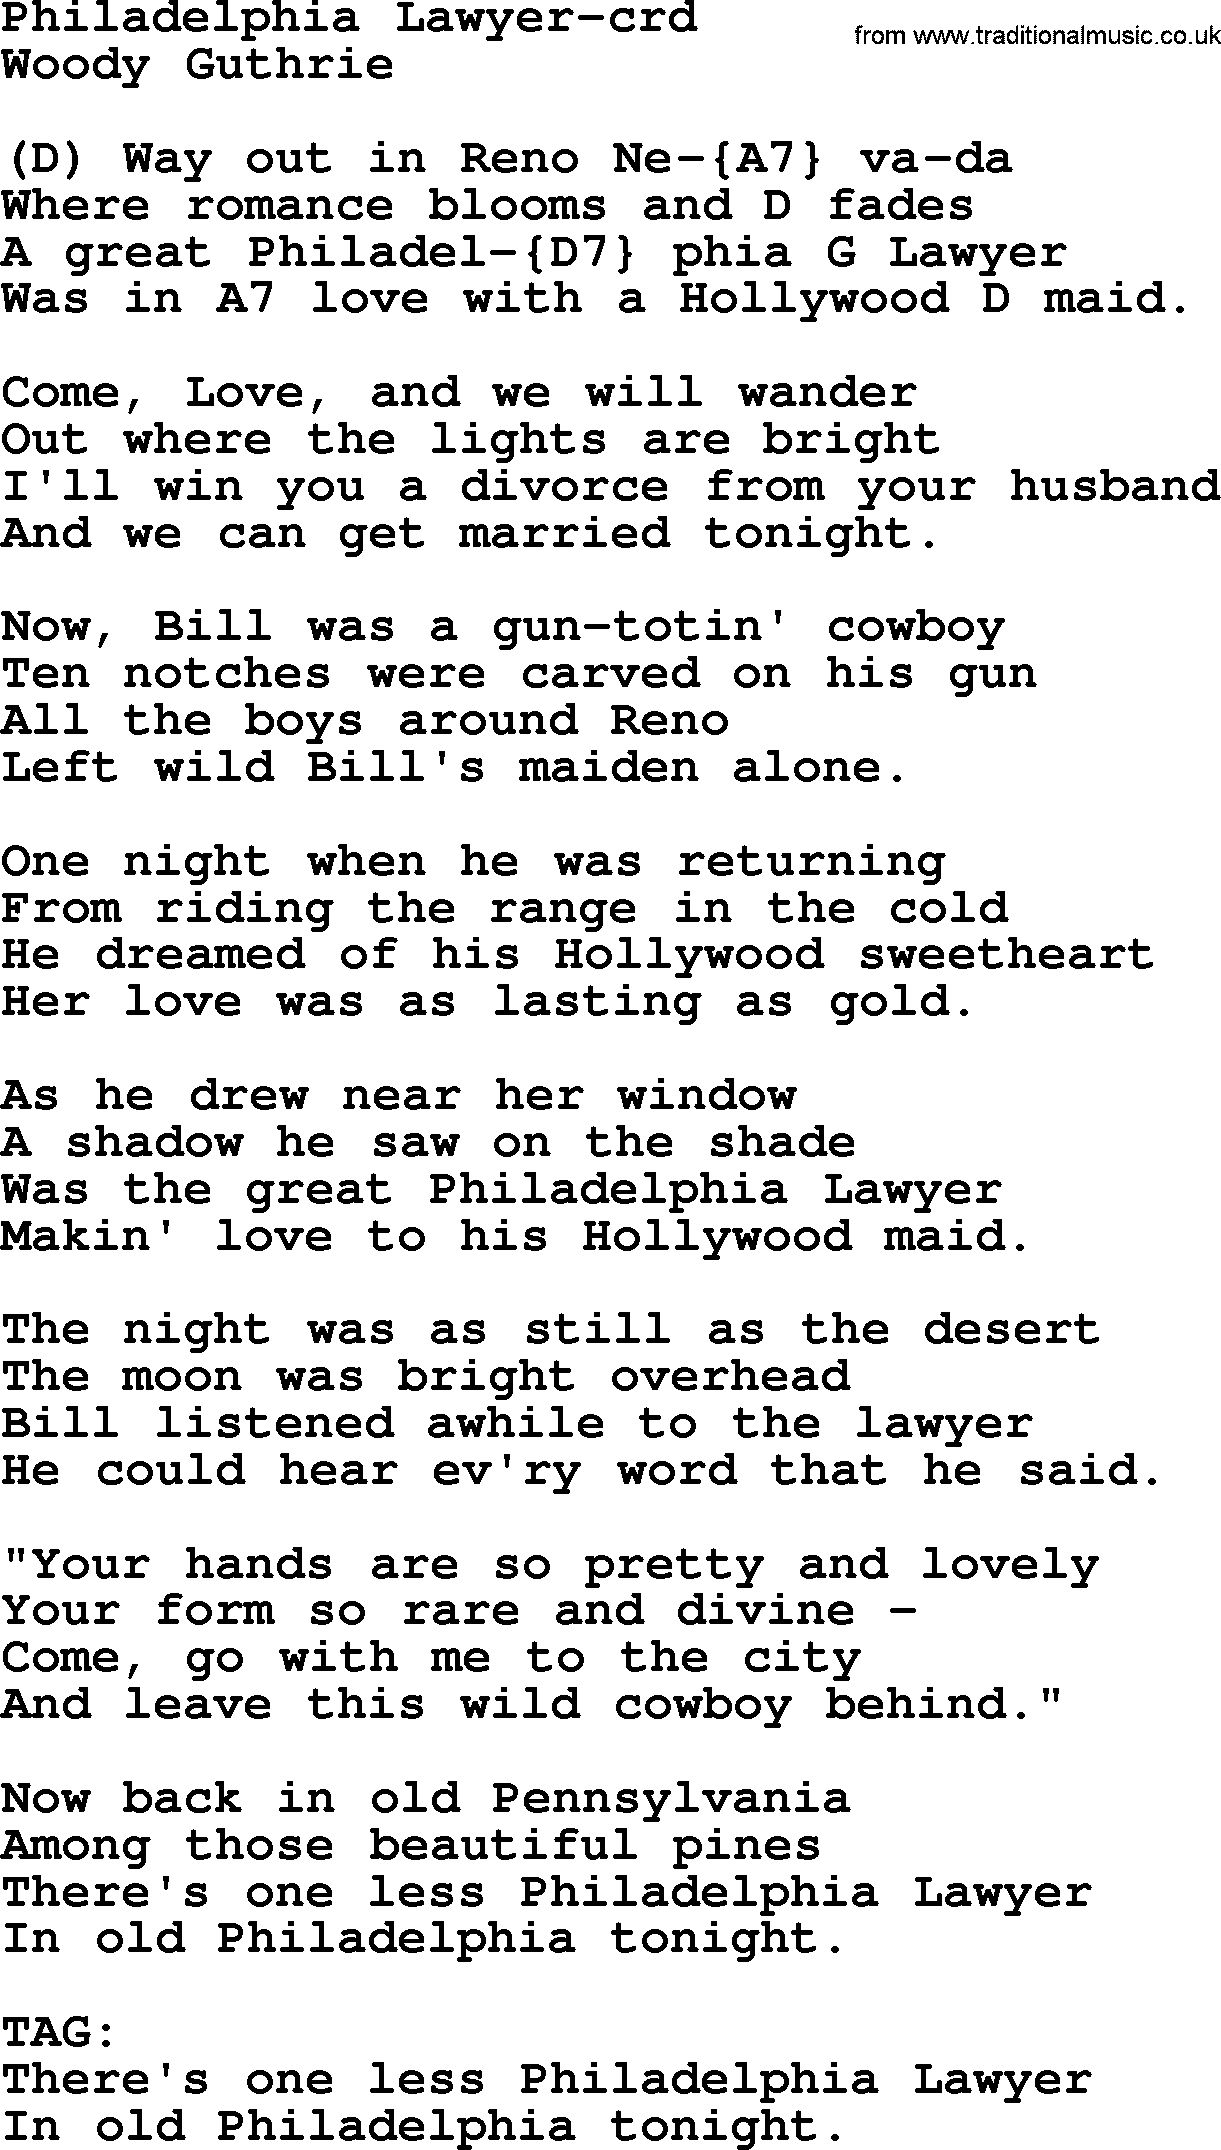 Woody Guthrie song Philadelphia Lawyer lyrics and chords